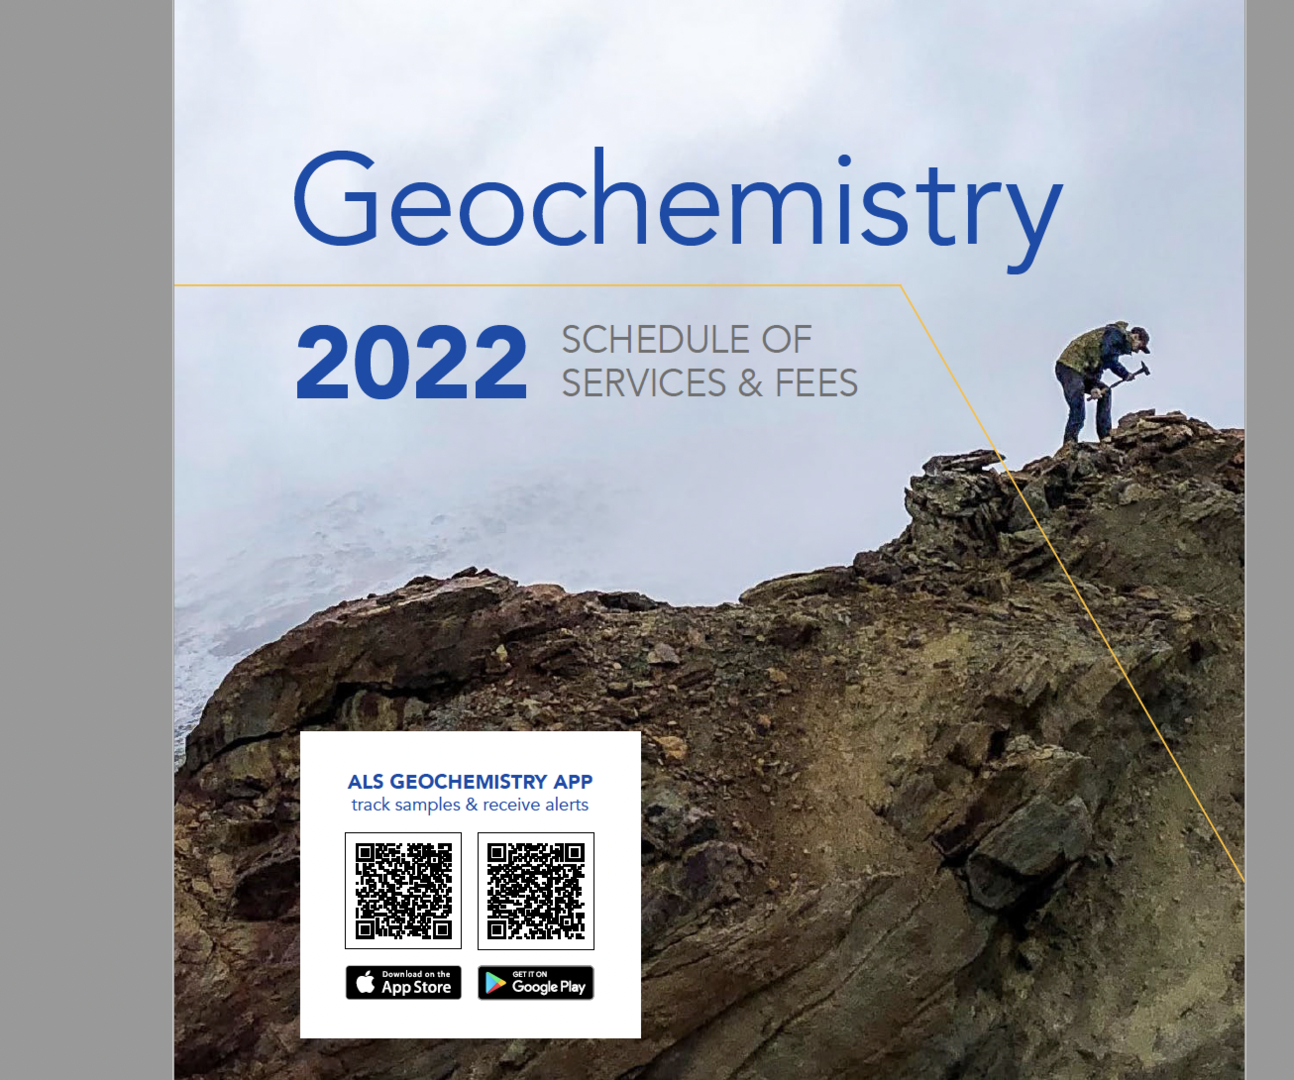 Geochemistry schedule of fees